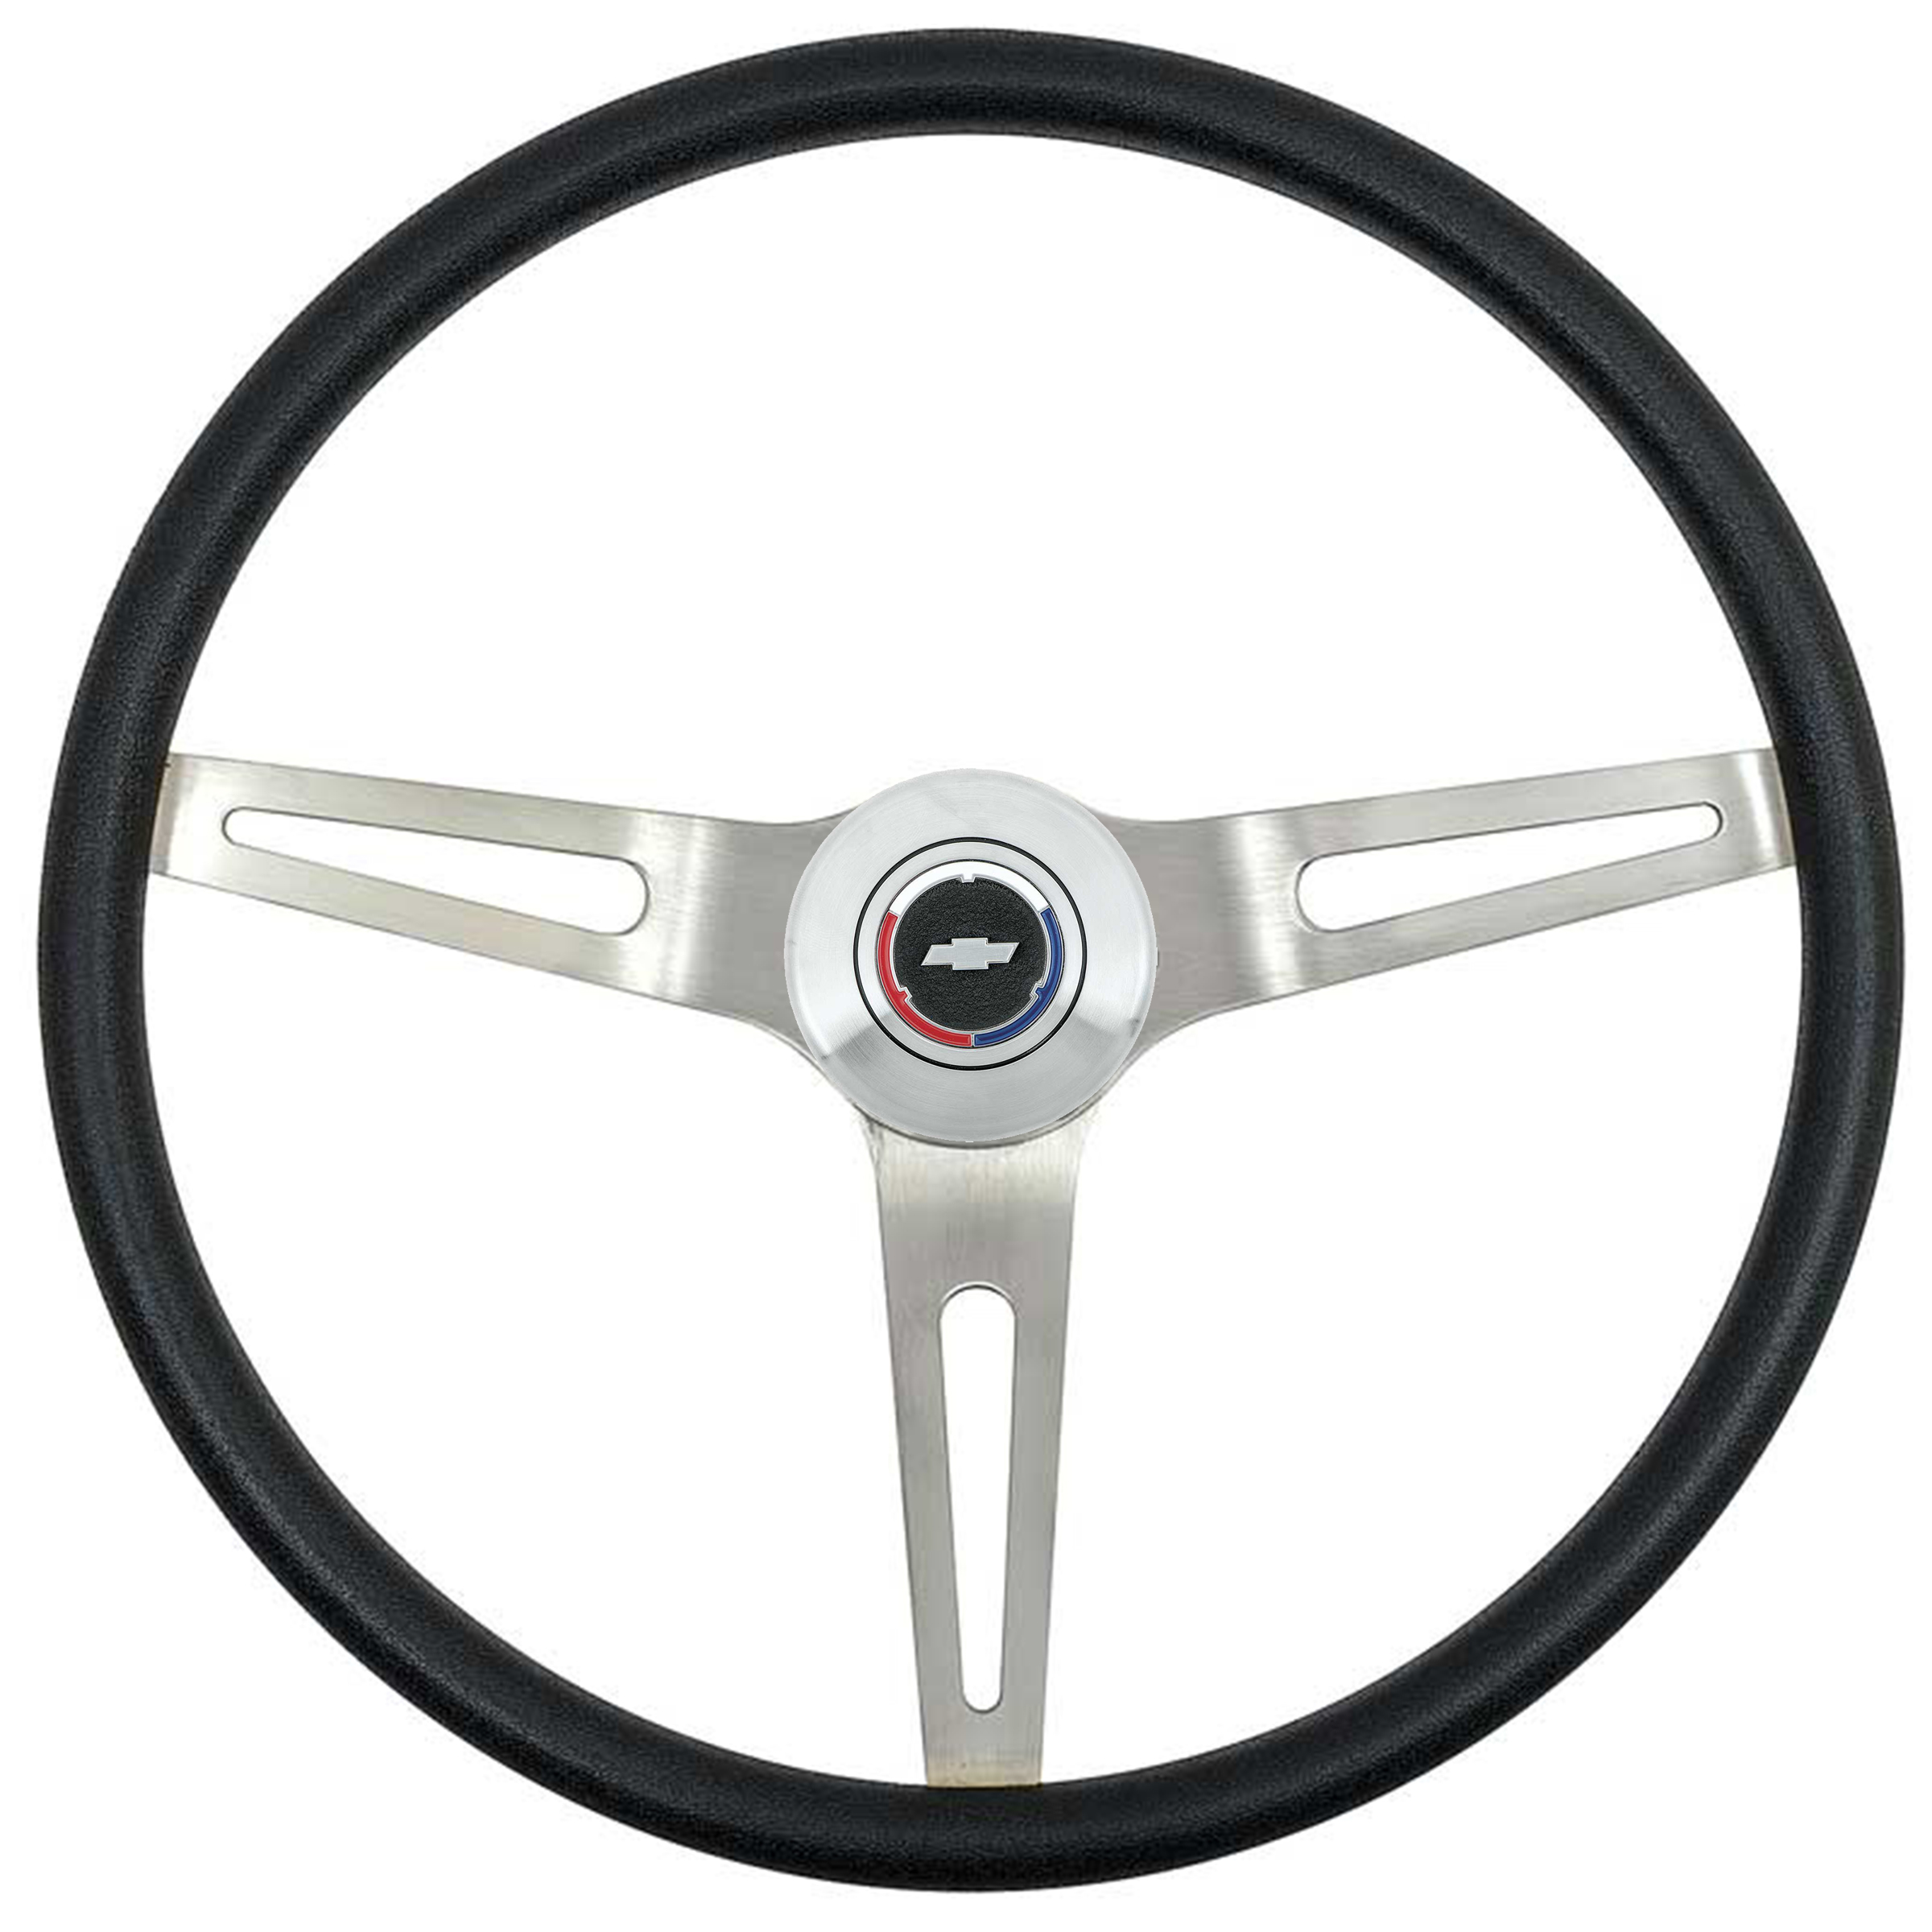 69 Black Comfort Grip Steering Wheel Kit with Tilt